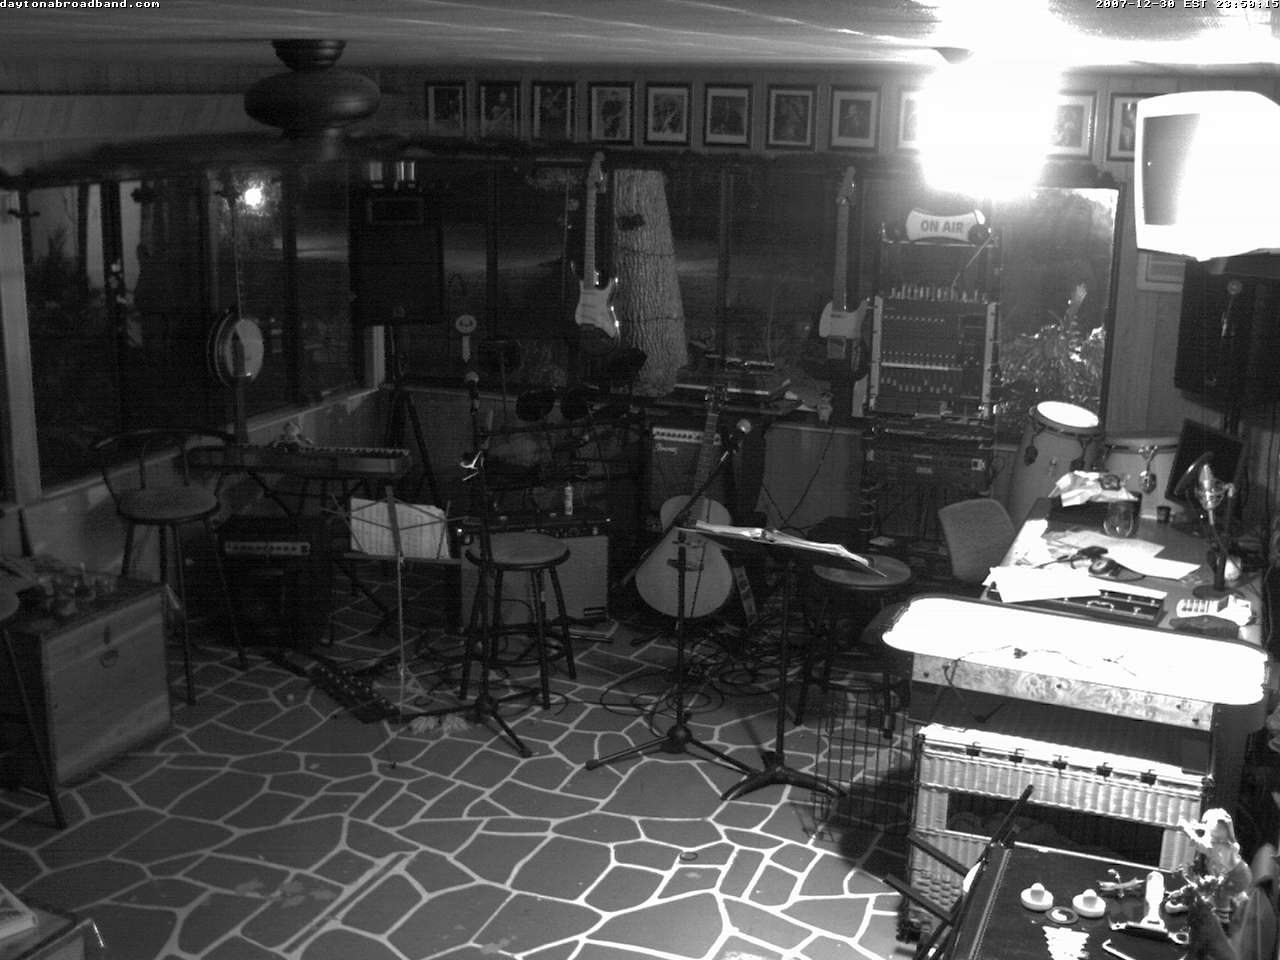 Night Crew rehearsal studio